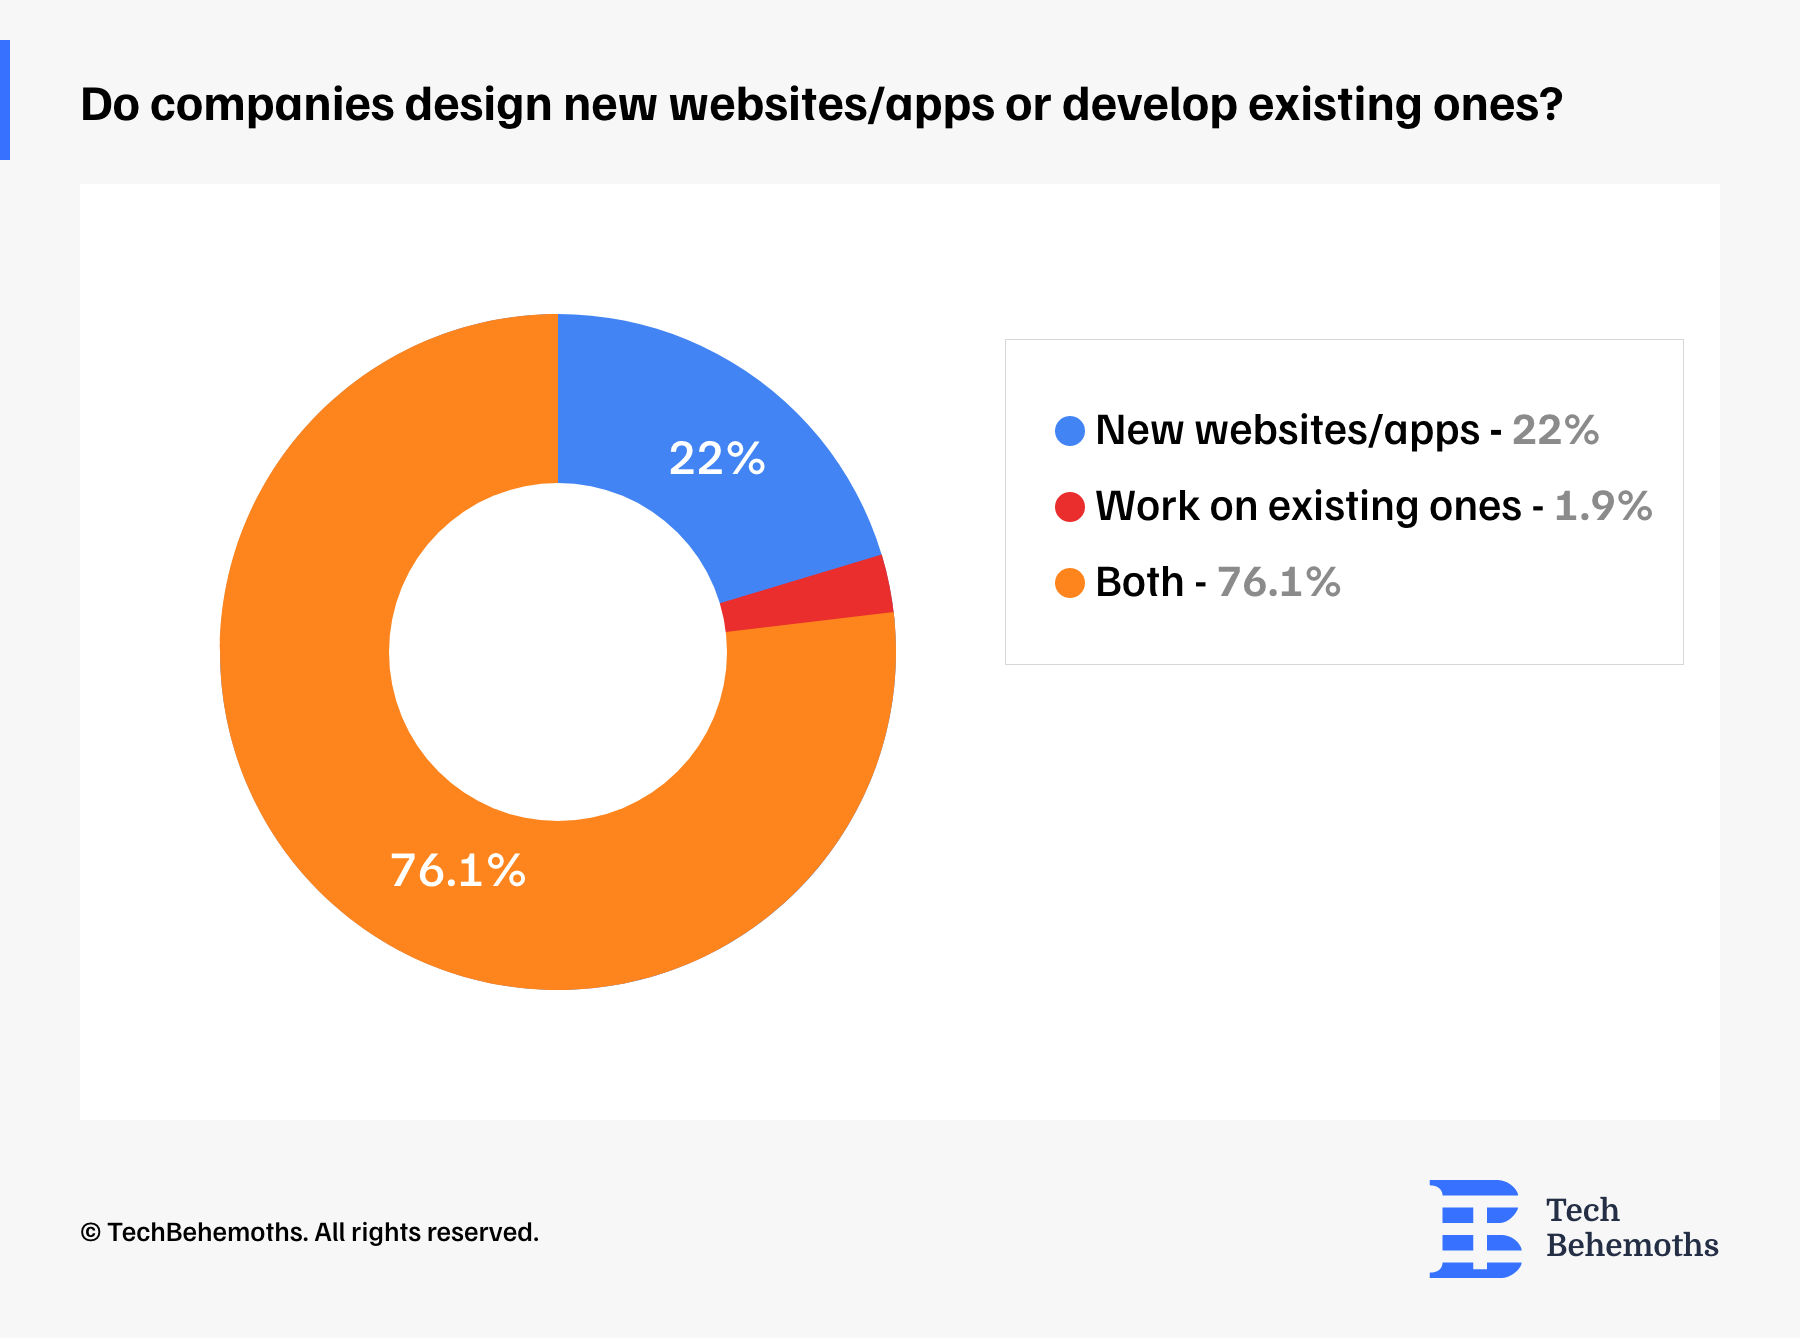 Do you mostly design new websites/apps or work on existing ones?